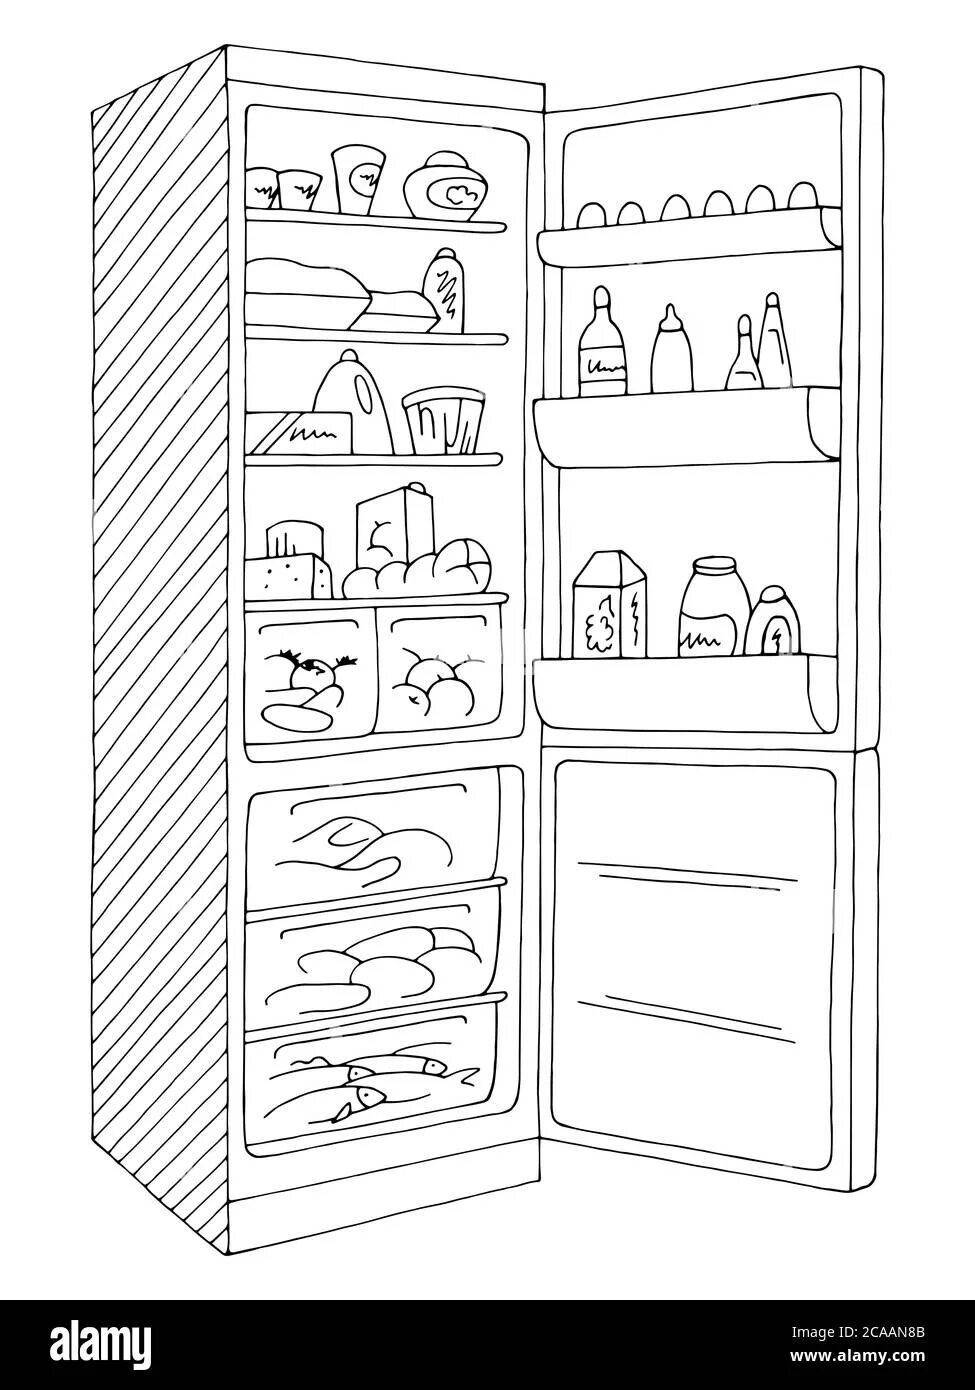 Joyful coloring of the refrigerator for children